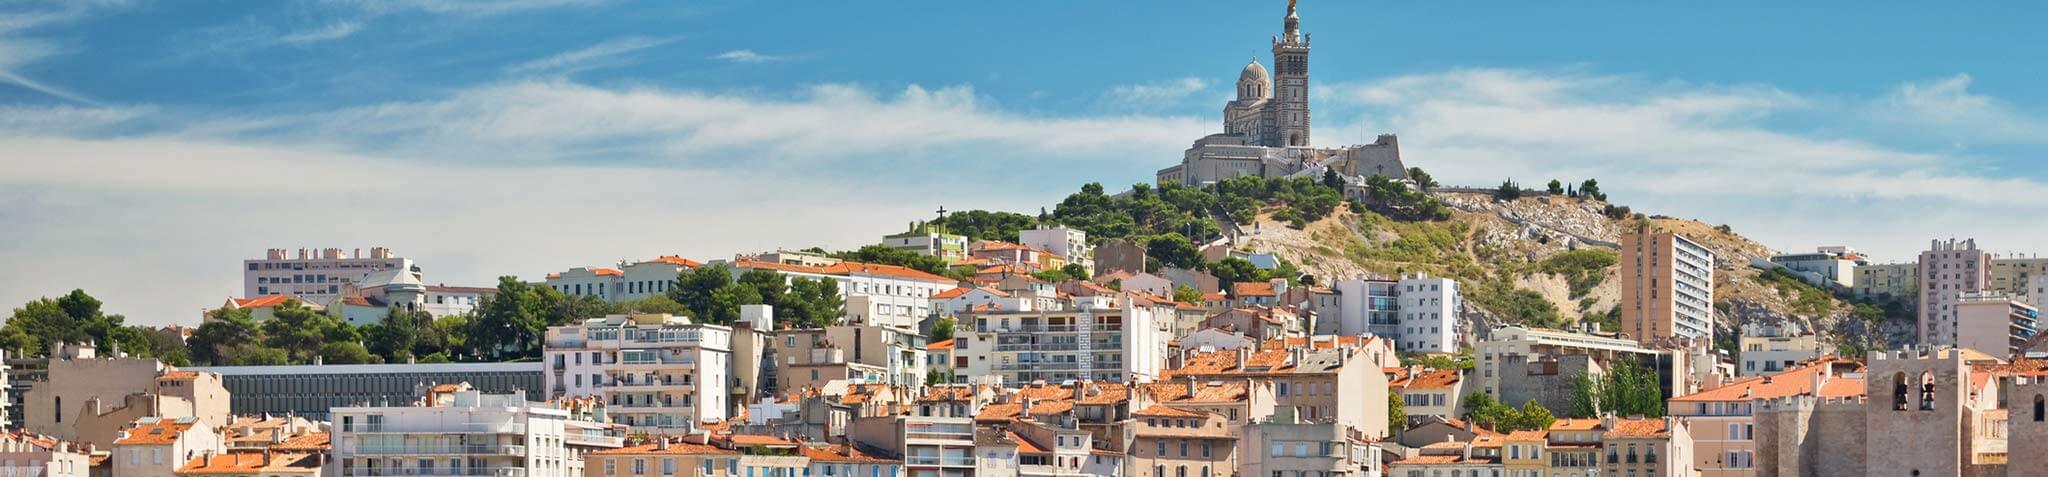 Investir en Pinel à Marseille